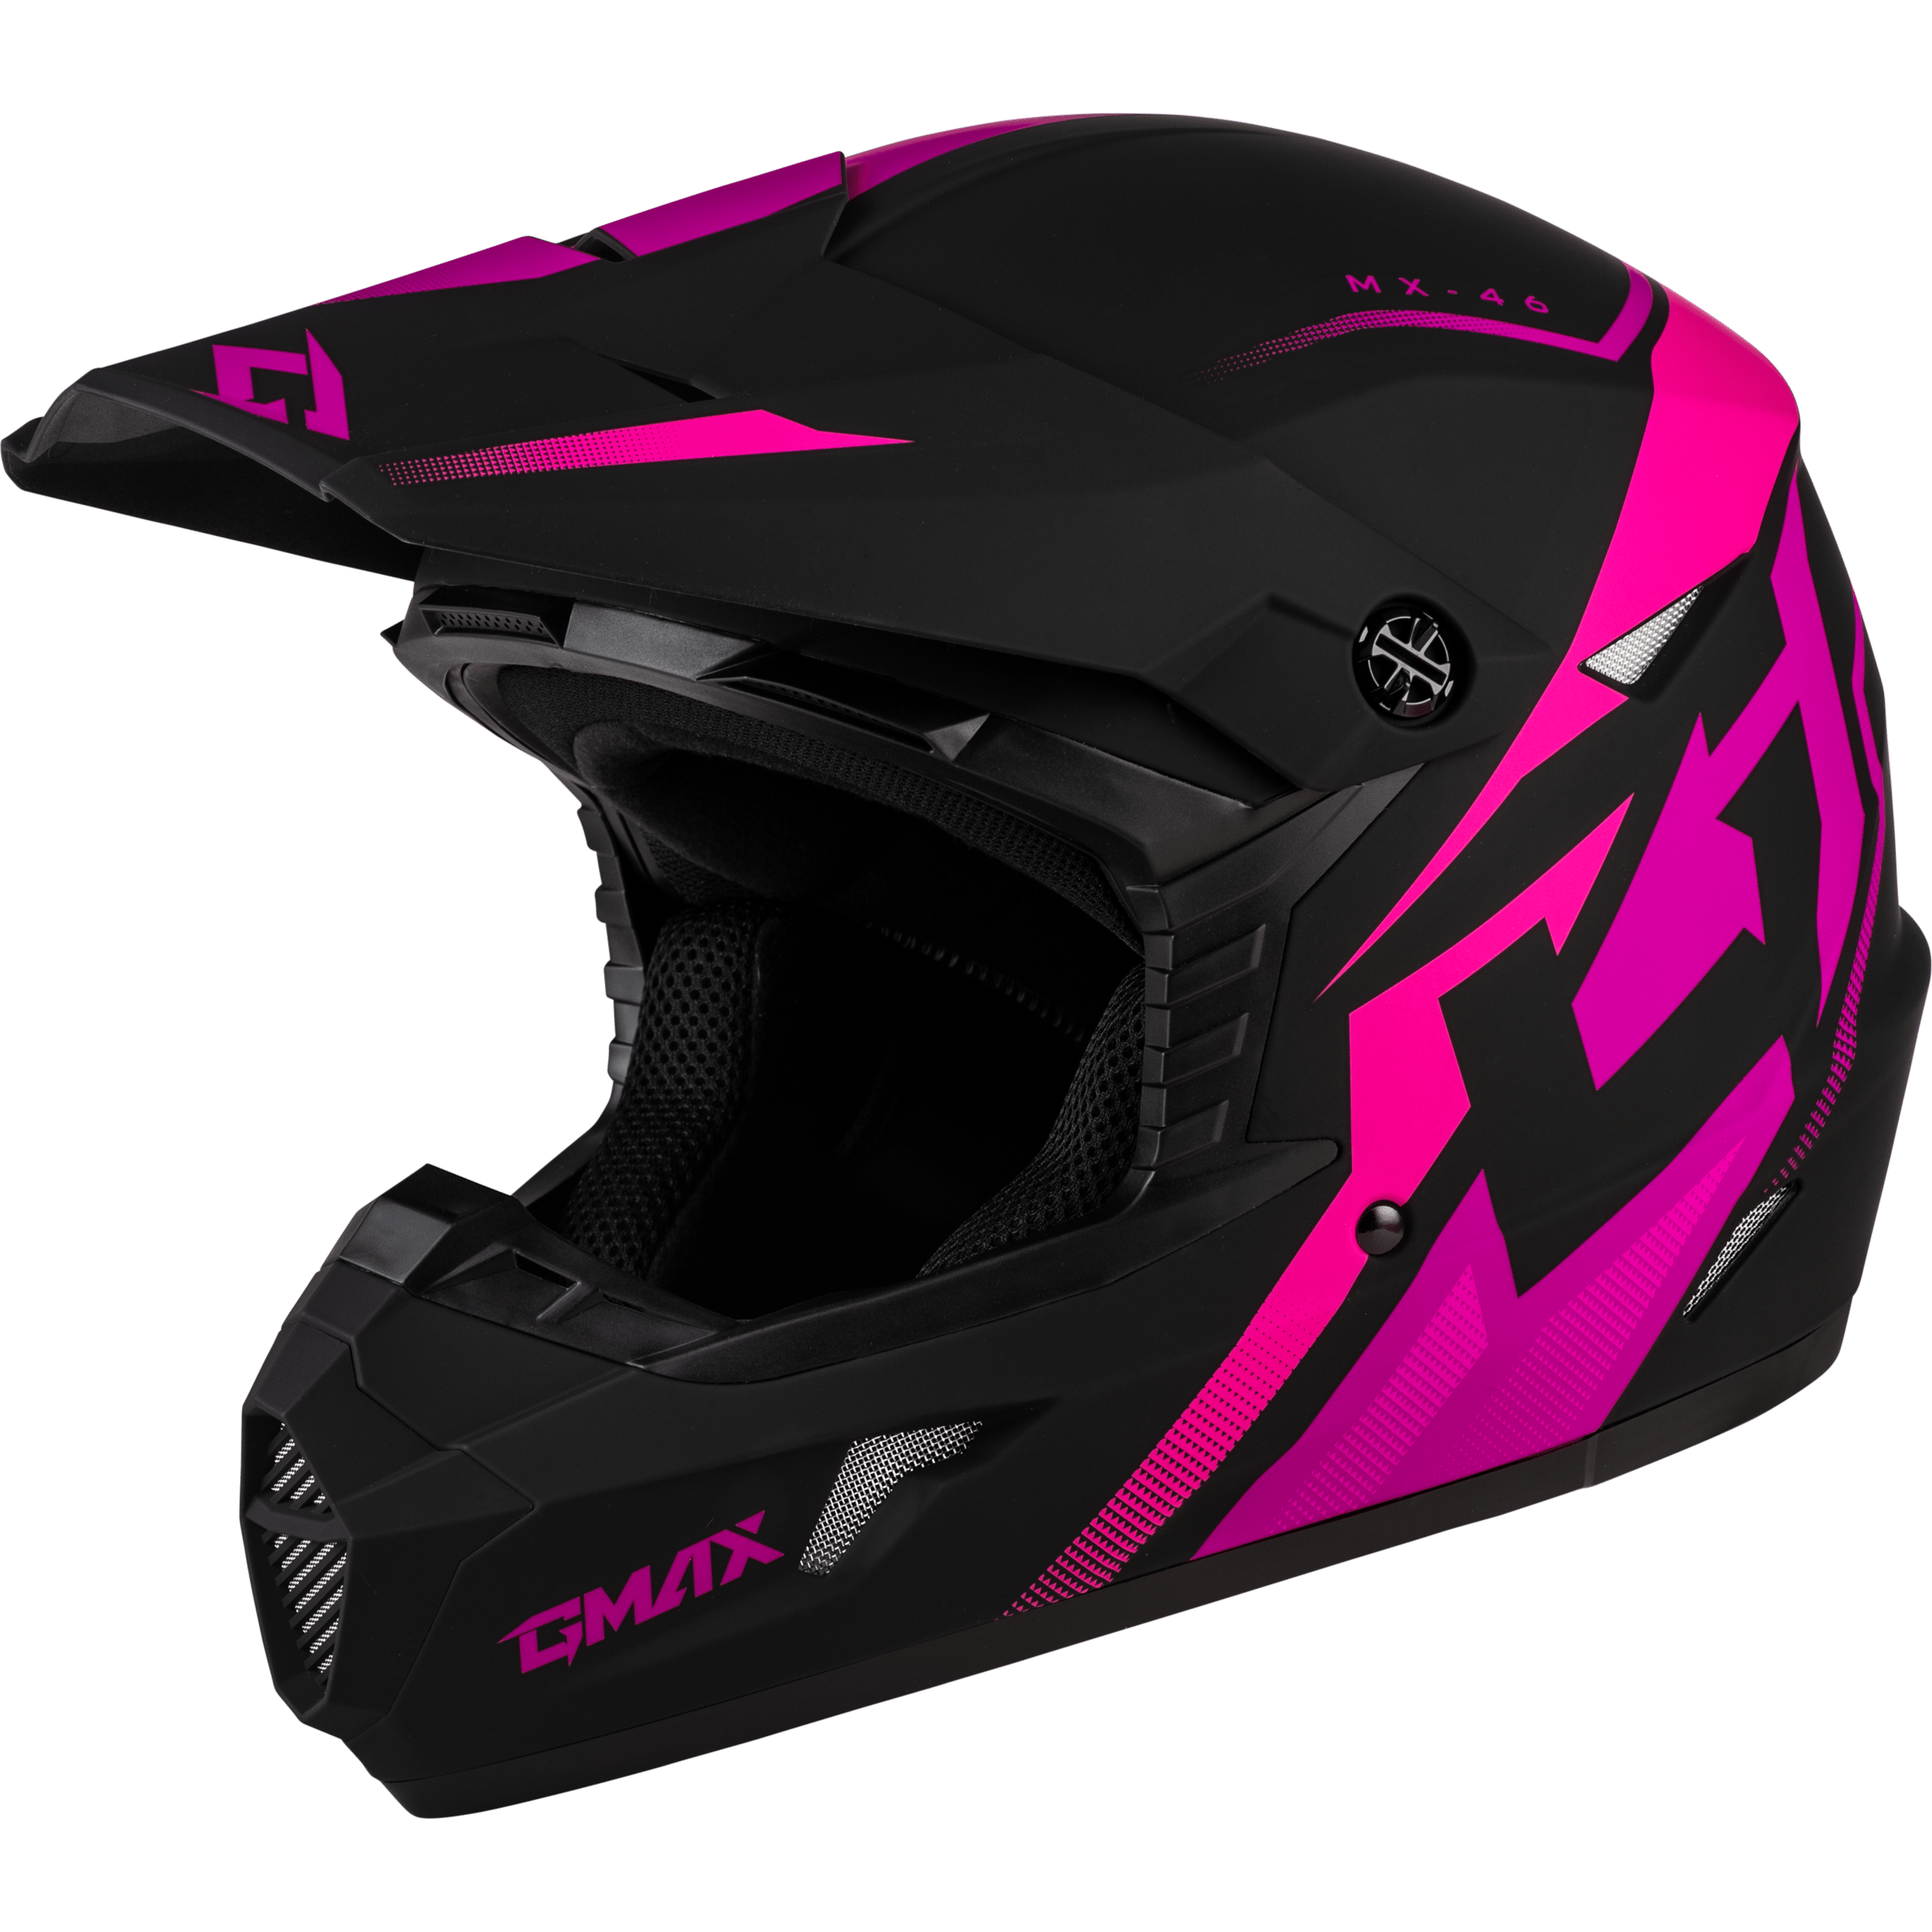 Western Powersports Off Road Helmet Black/Pink / LG MX-46 Compound Helmet by GMAX D3464346